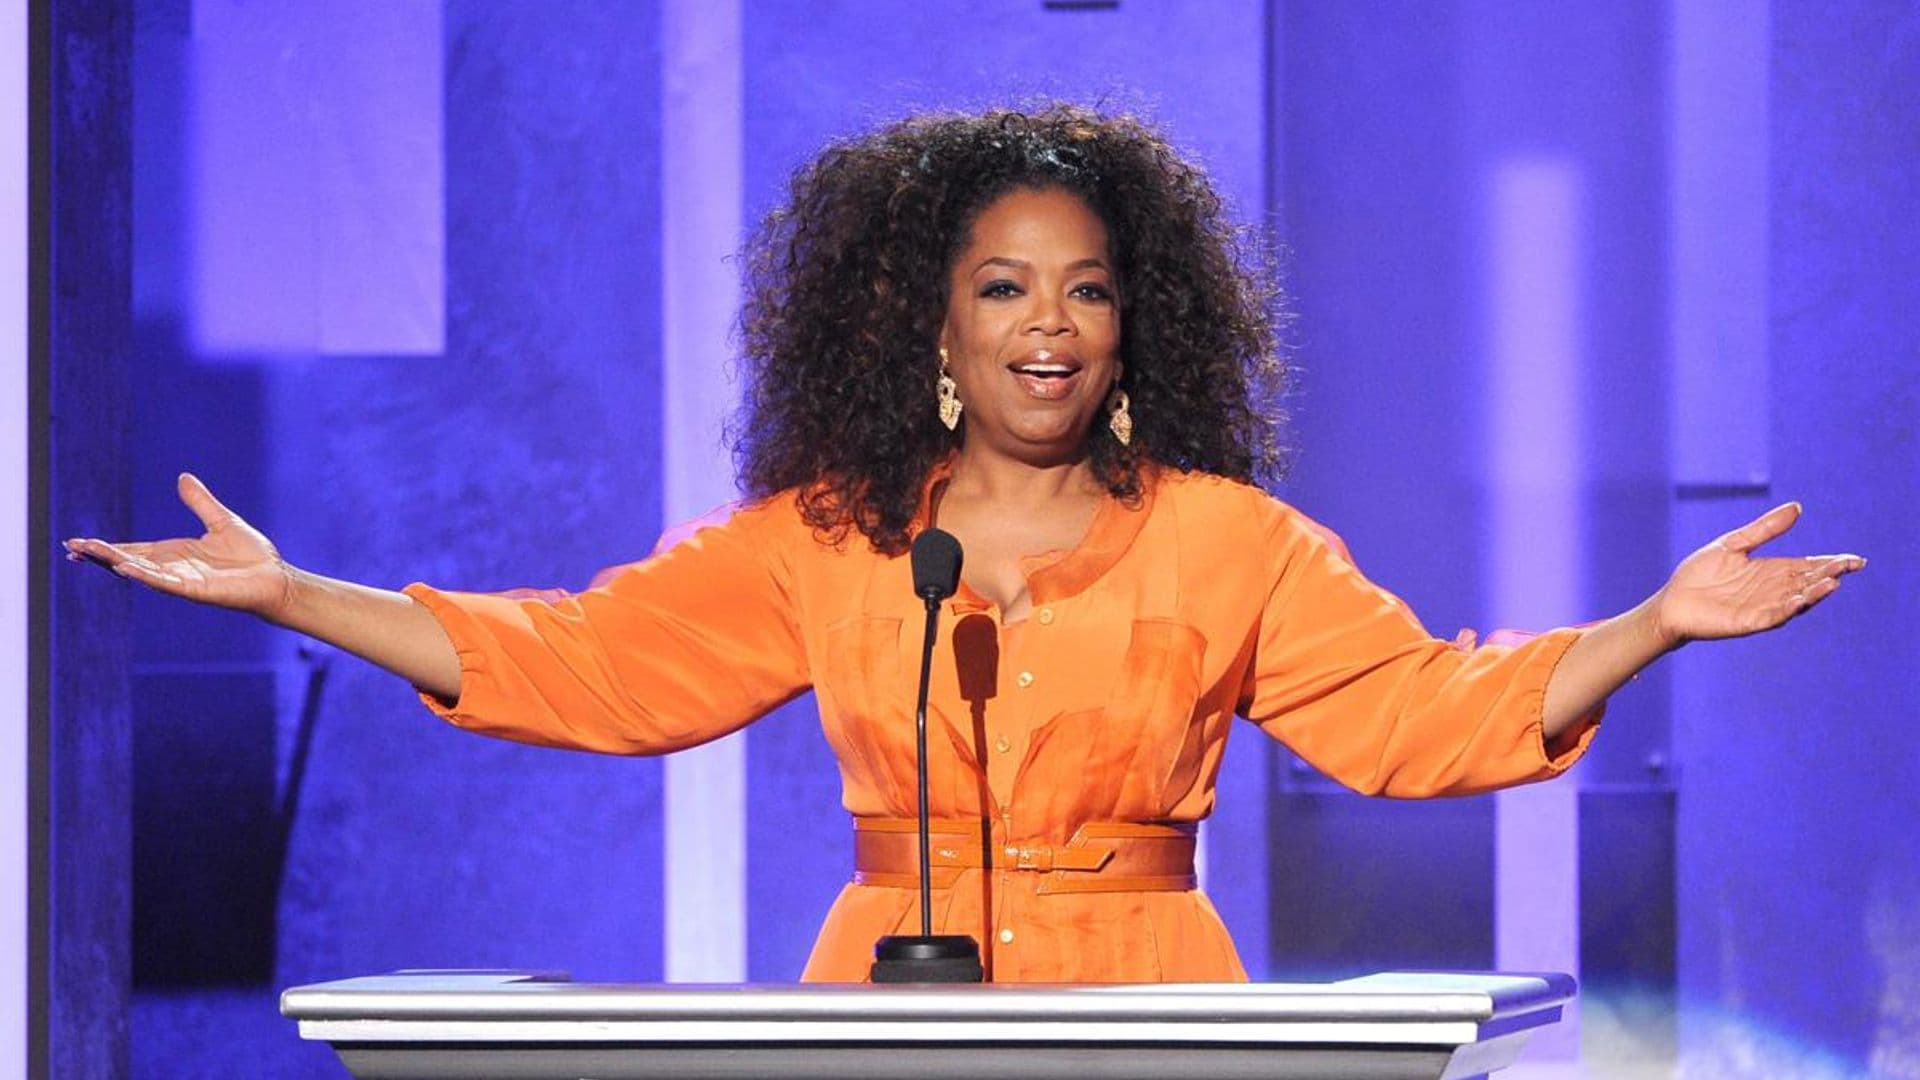 Oprah Winfrey’s 5 principles for success